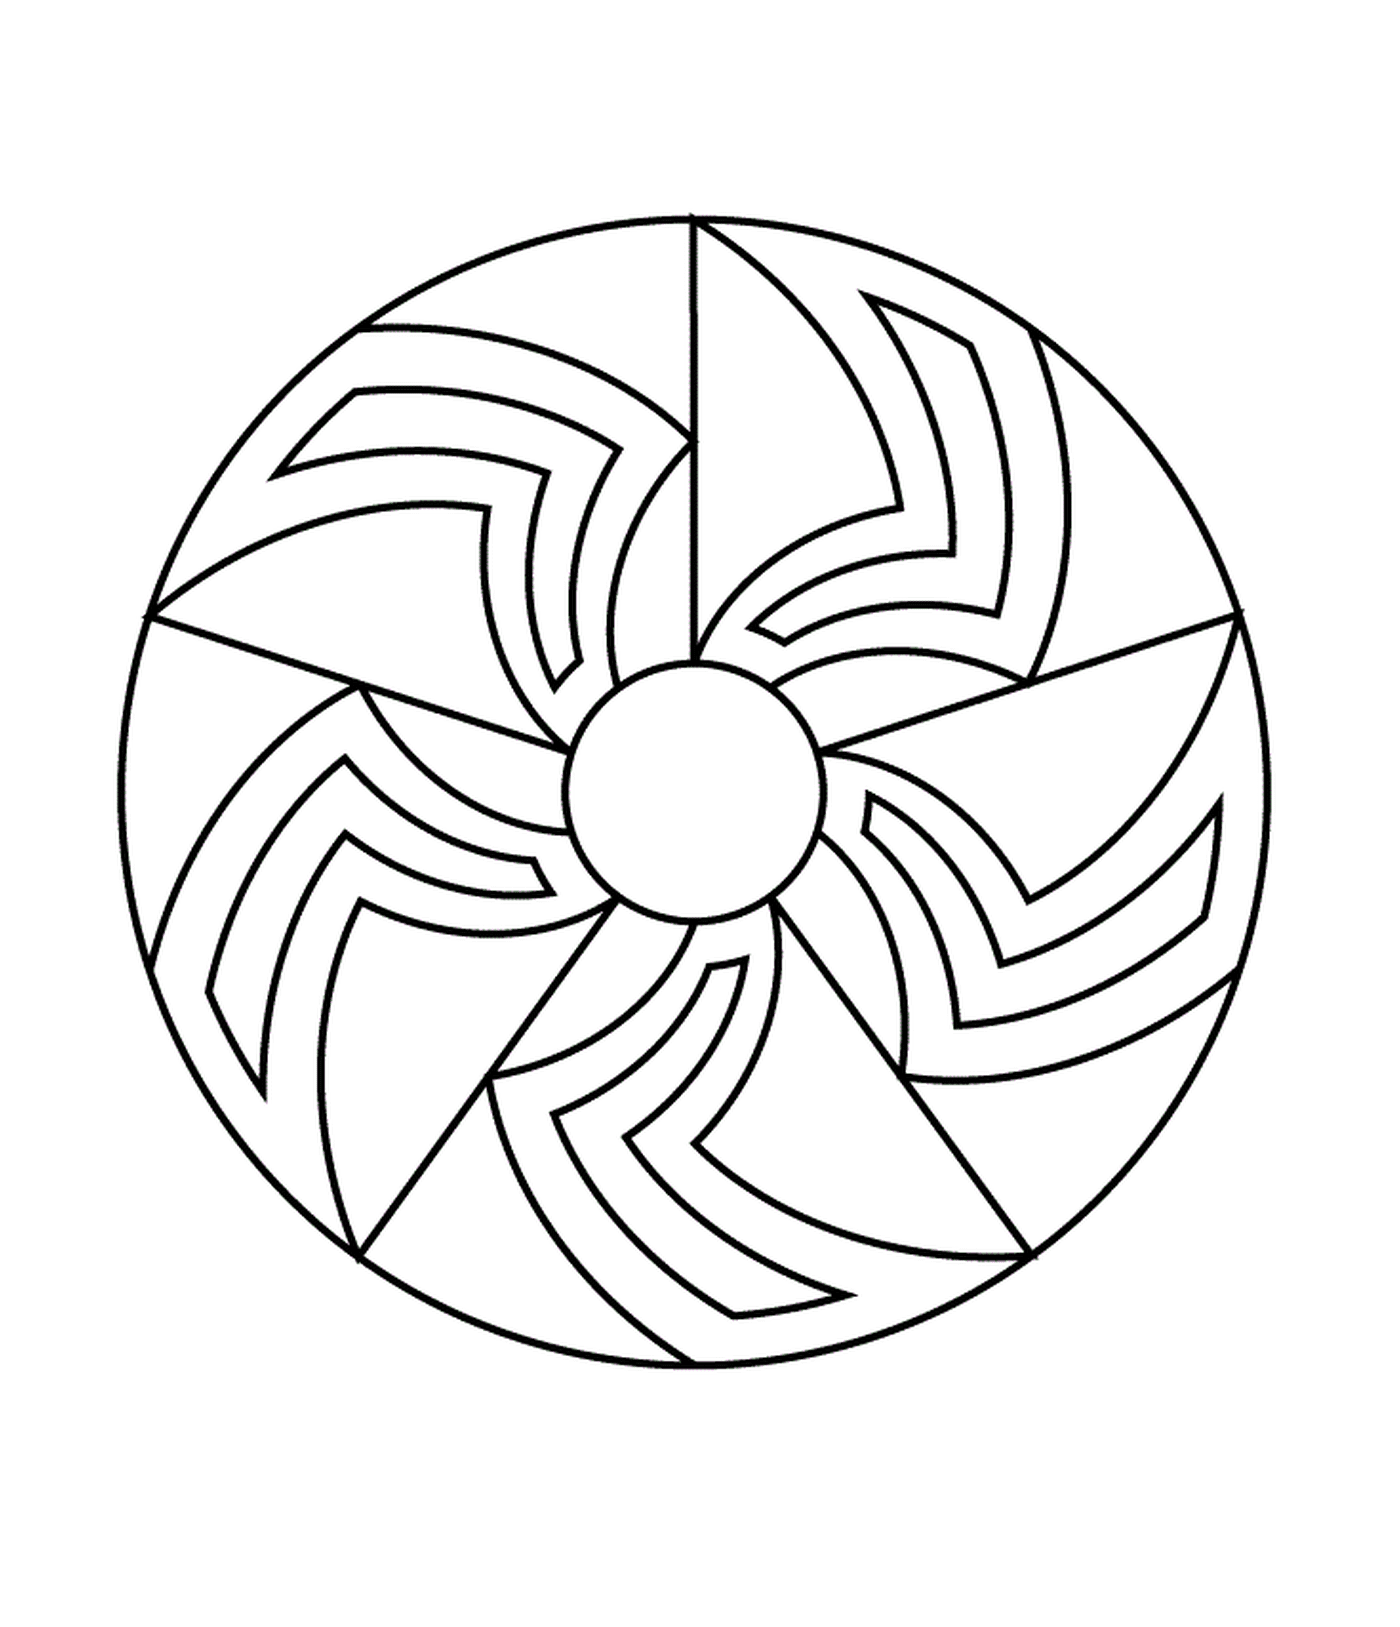  A circular pattern 